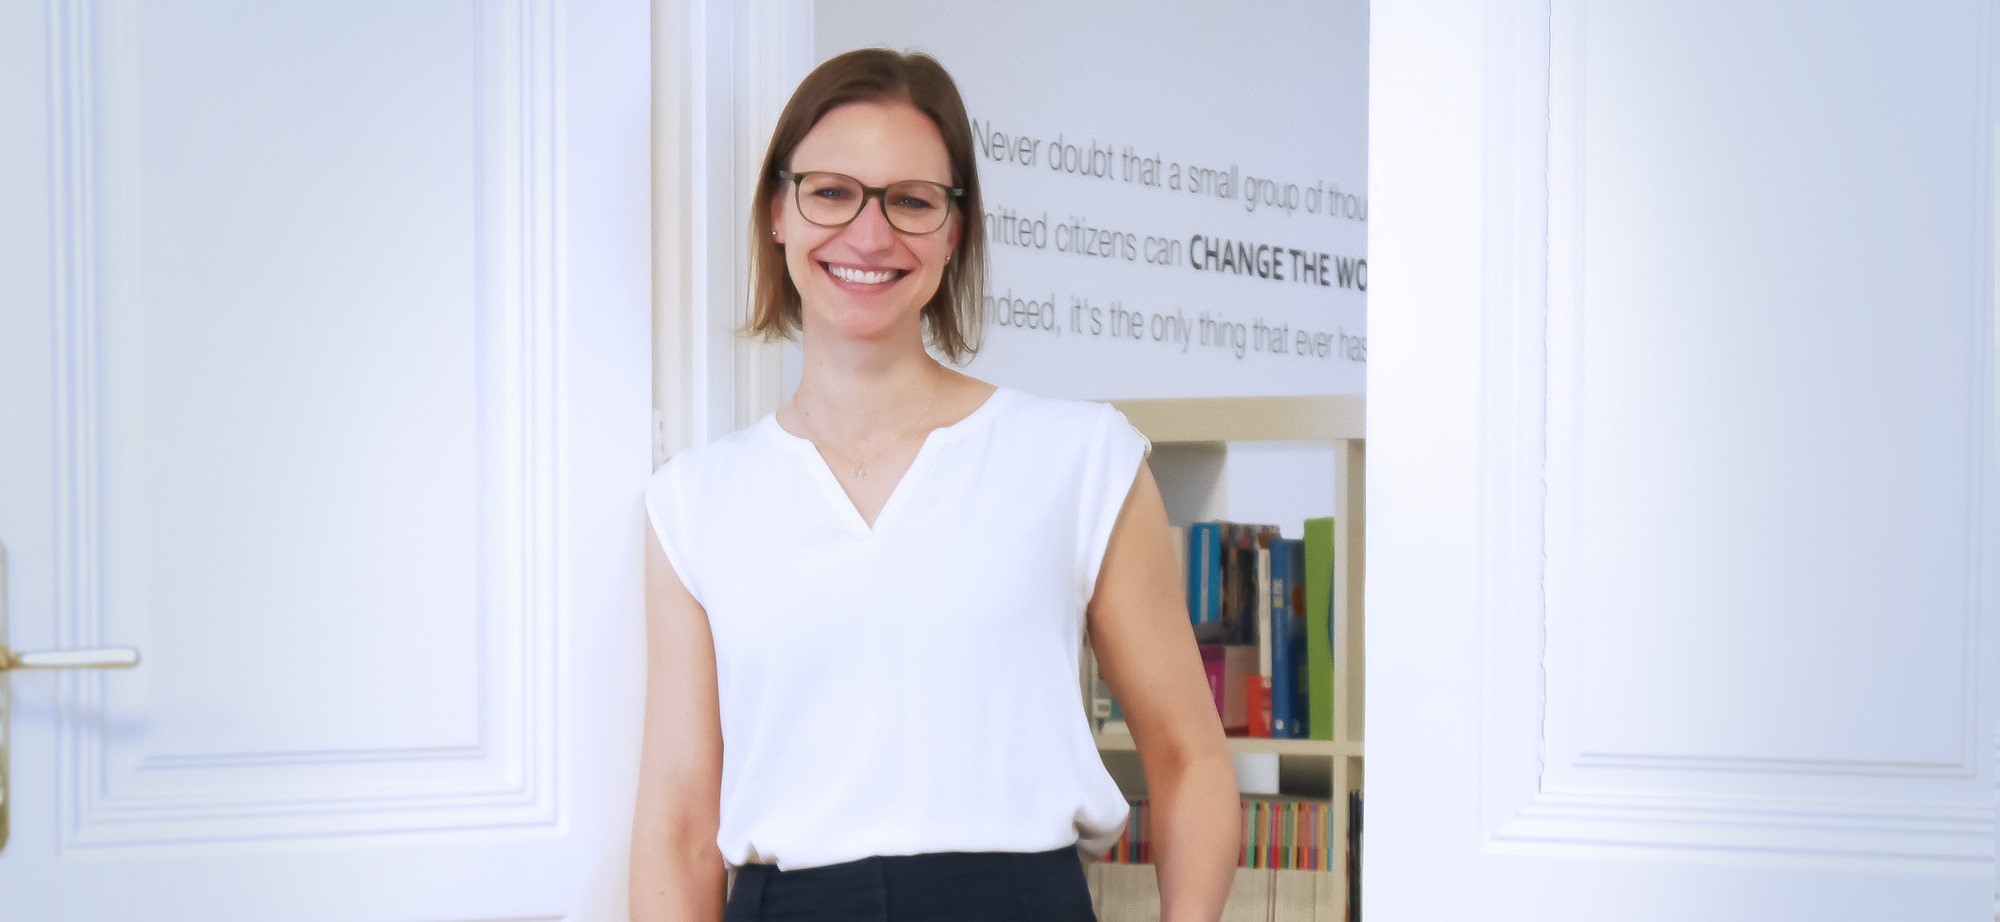 Claudia Pühringer ist Projektmanagerin bei vieconsult